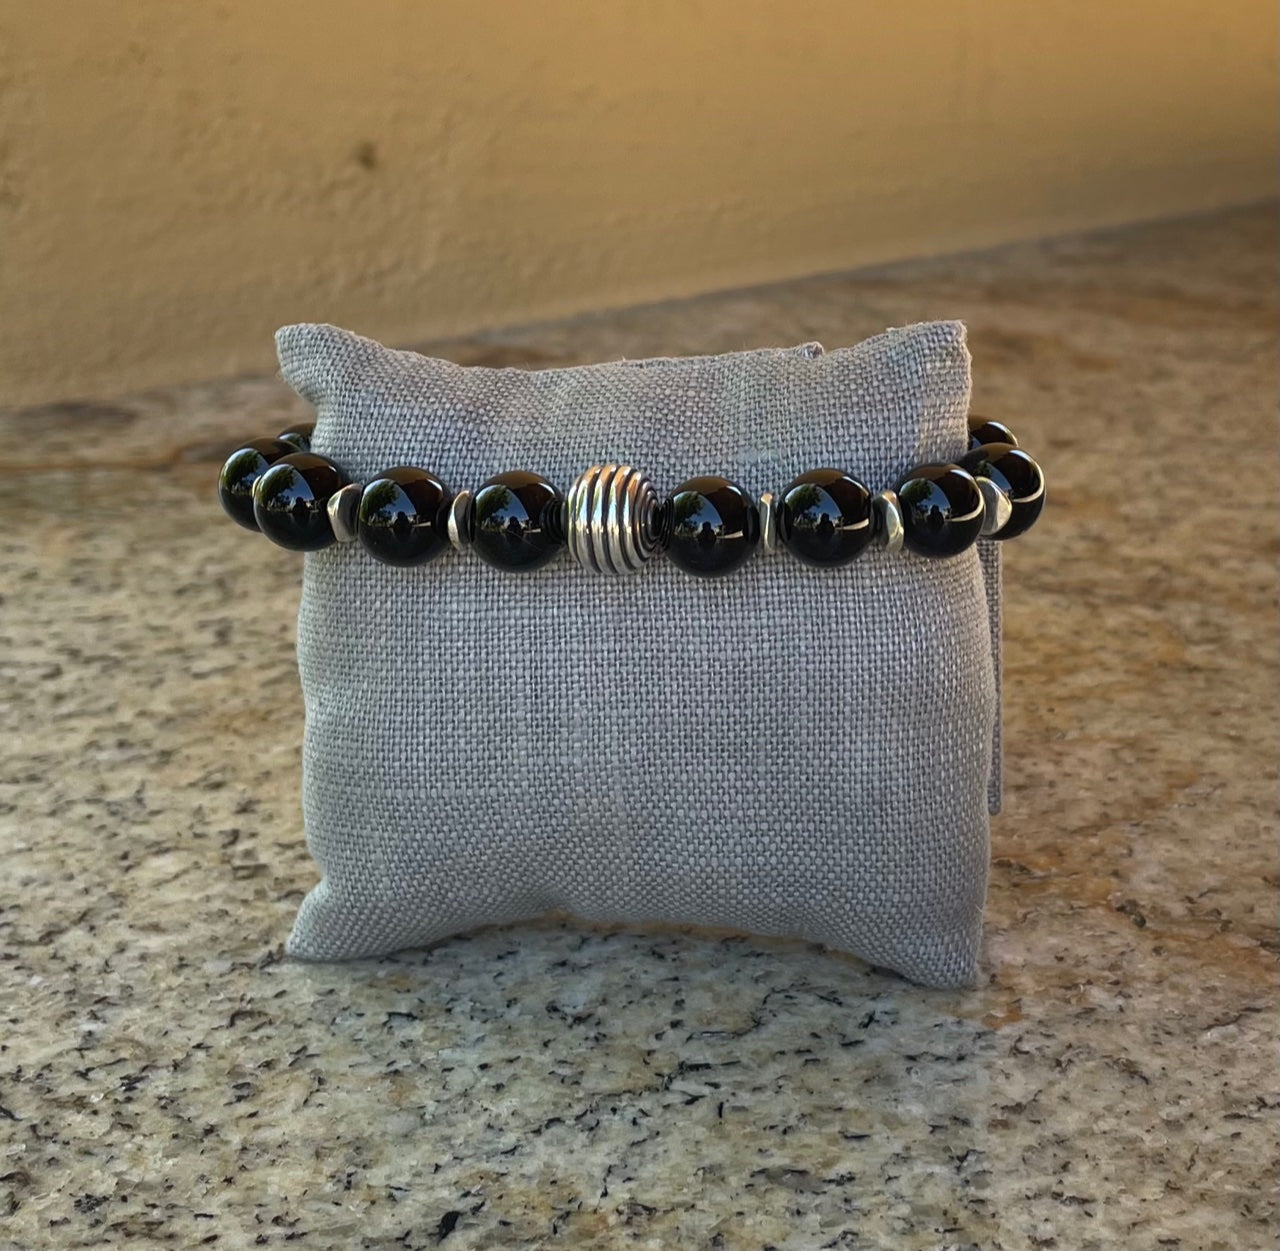 Bracelet - 10mm black onyx stretch bracelet with silver spacers